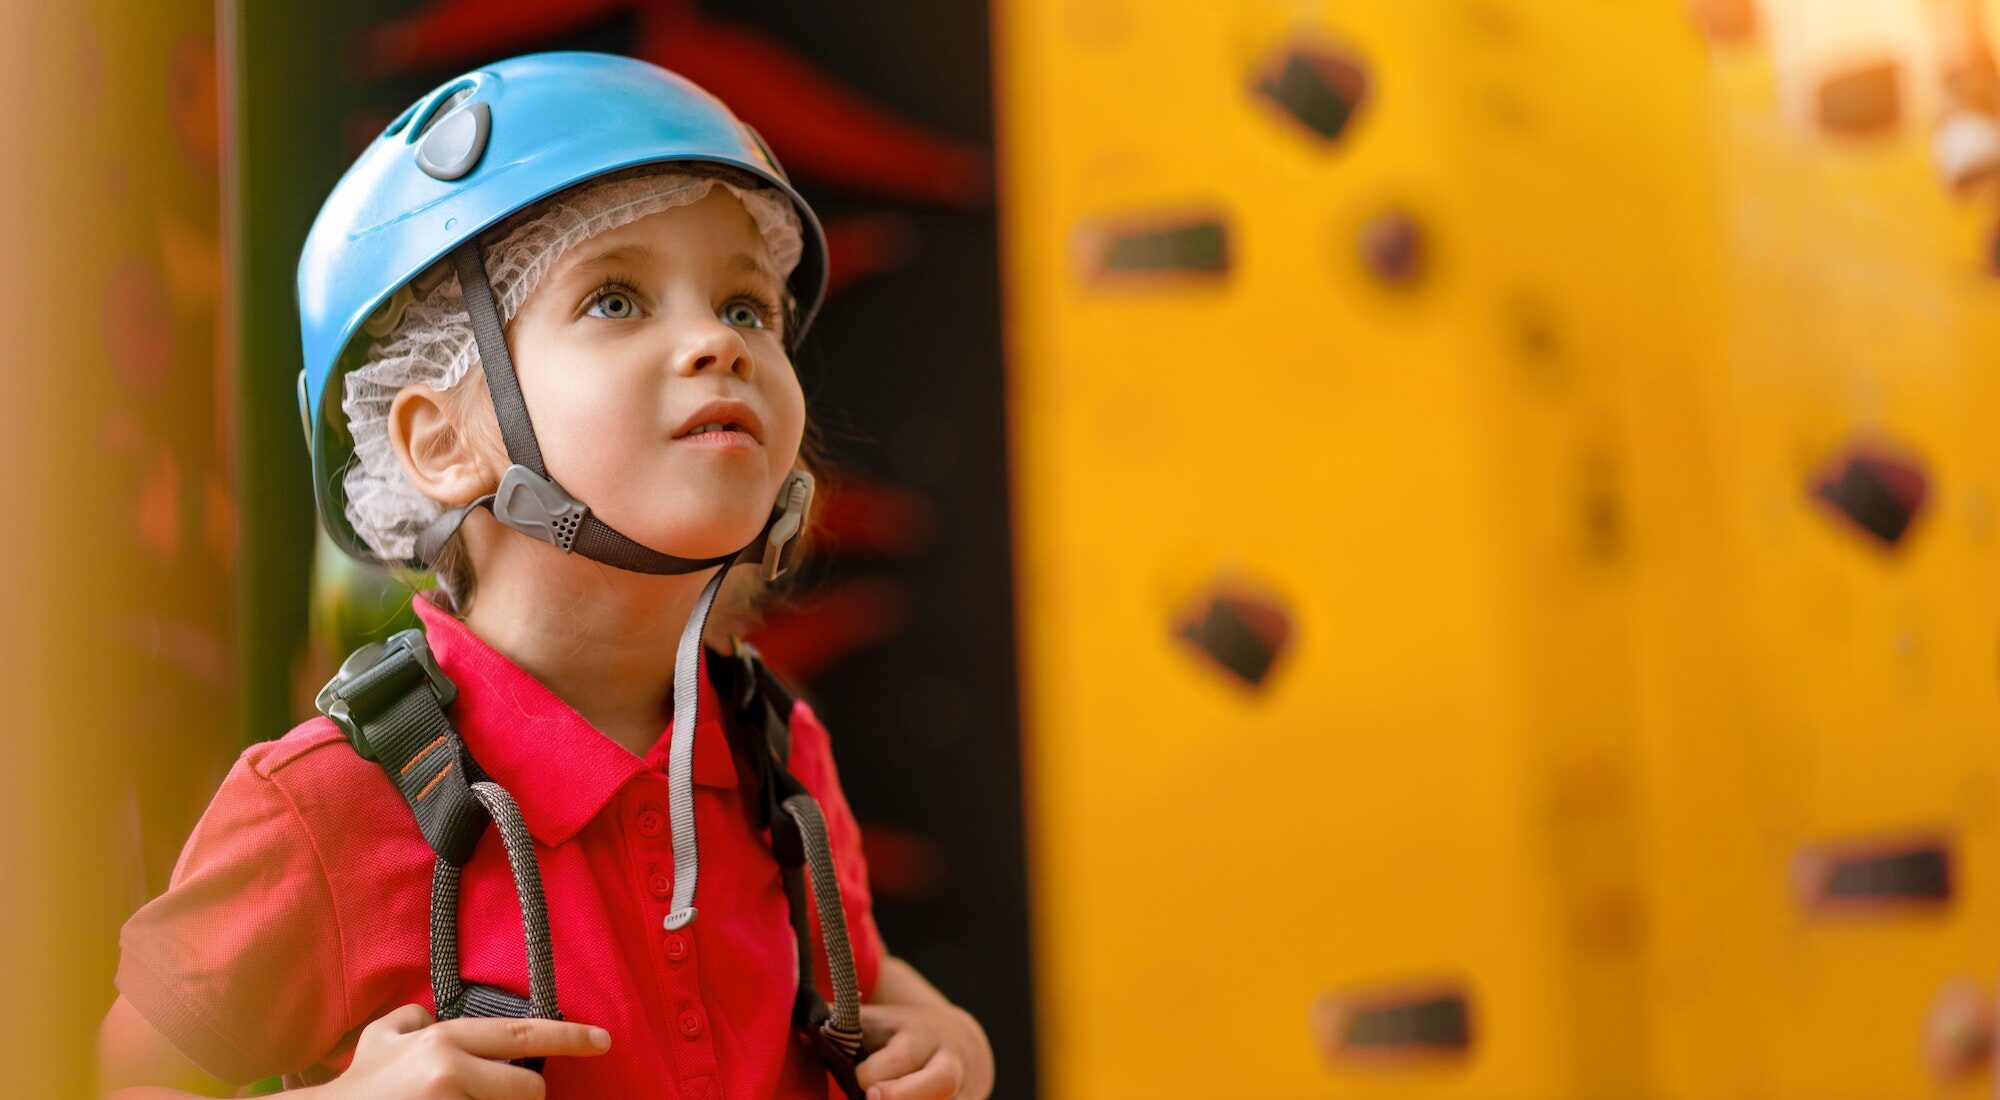 Child climbing on wall in amusement centre. Climbing training for children. Little girl helmet